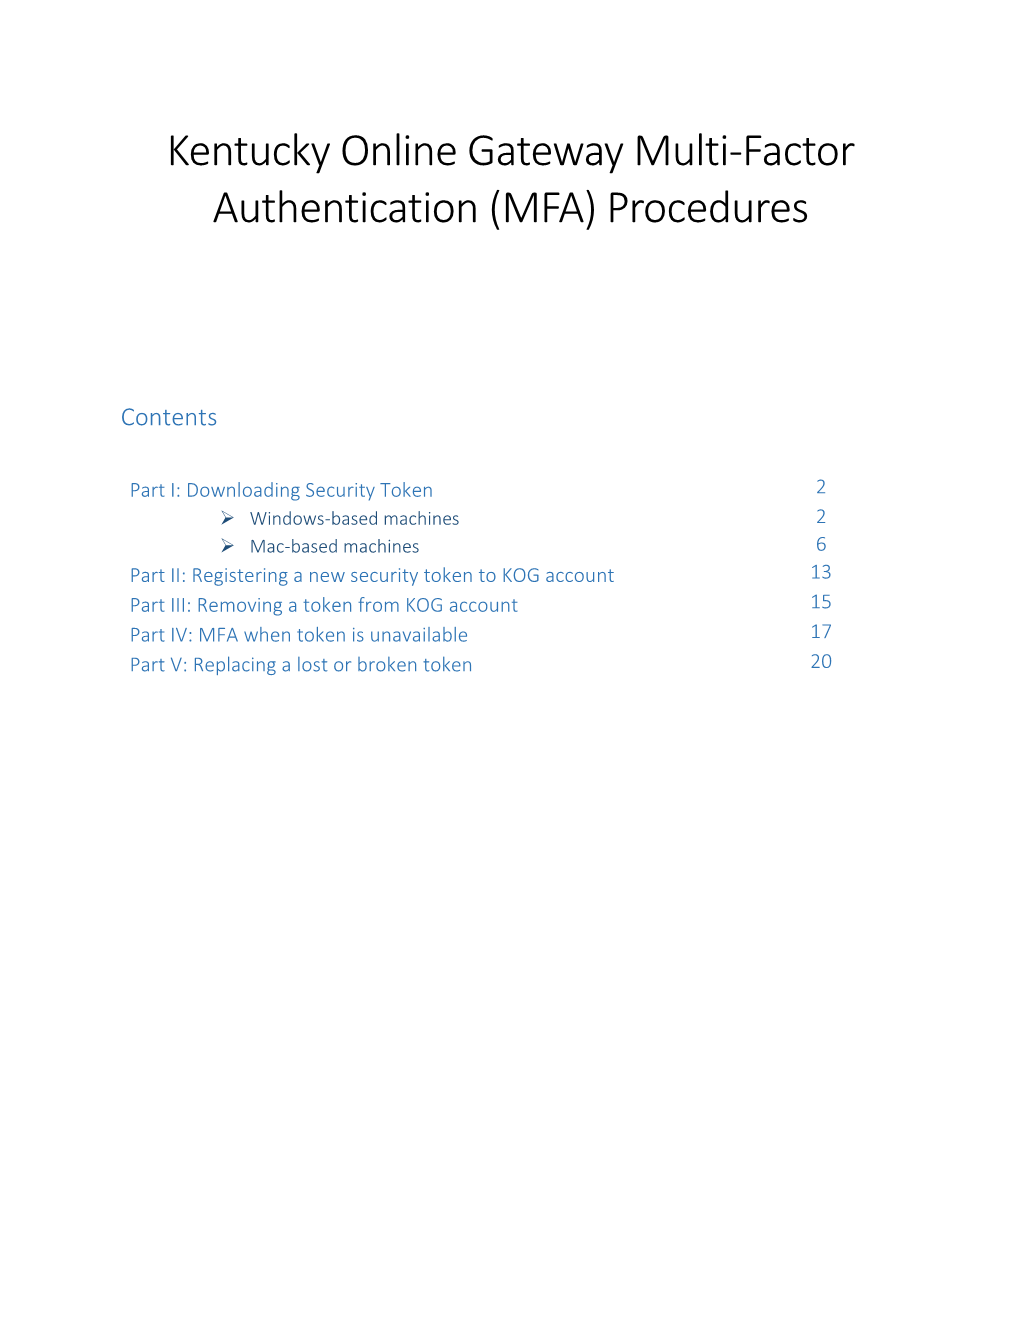 Kentucky Online Gateway Multi-Factor Authentication (MFA) Procedures